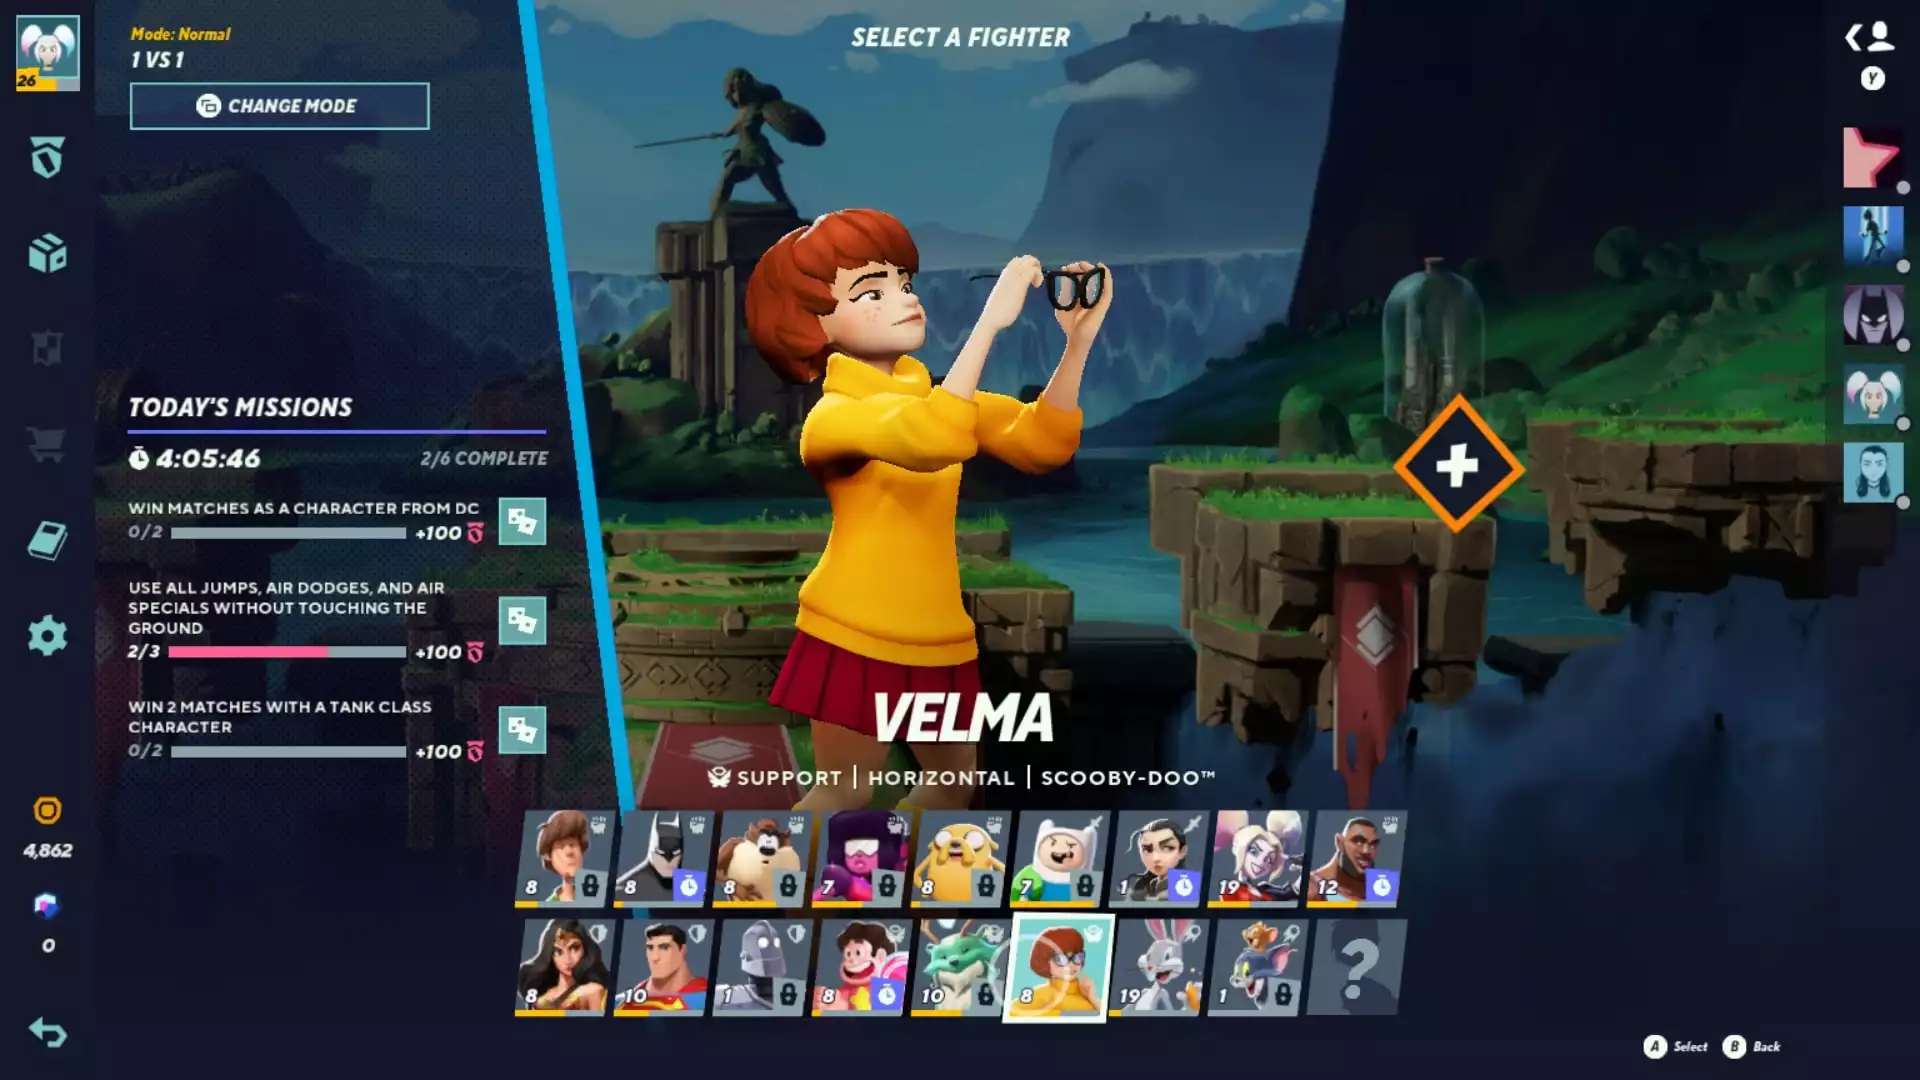 MultiVersus Velma combos, perks & specials